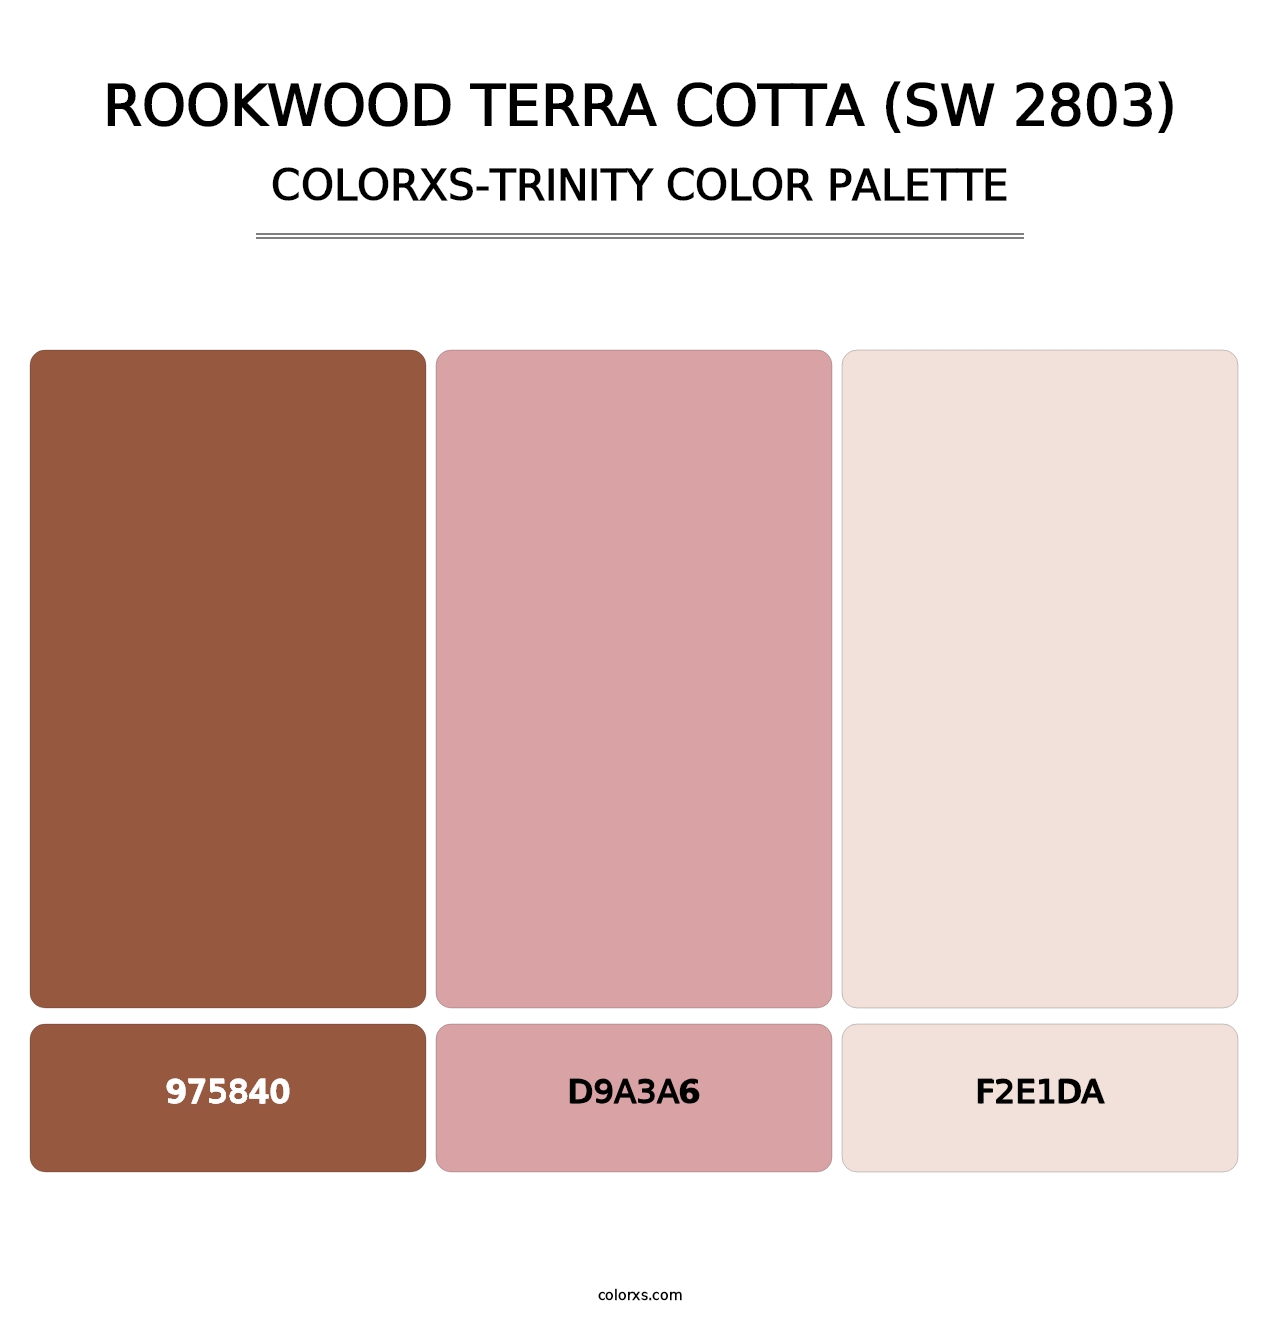 Rookwood Terra Cotta (SW 2803) - Colorxs Trinity Palette